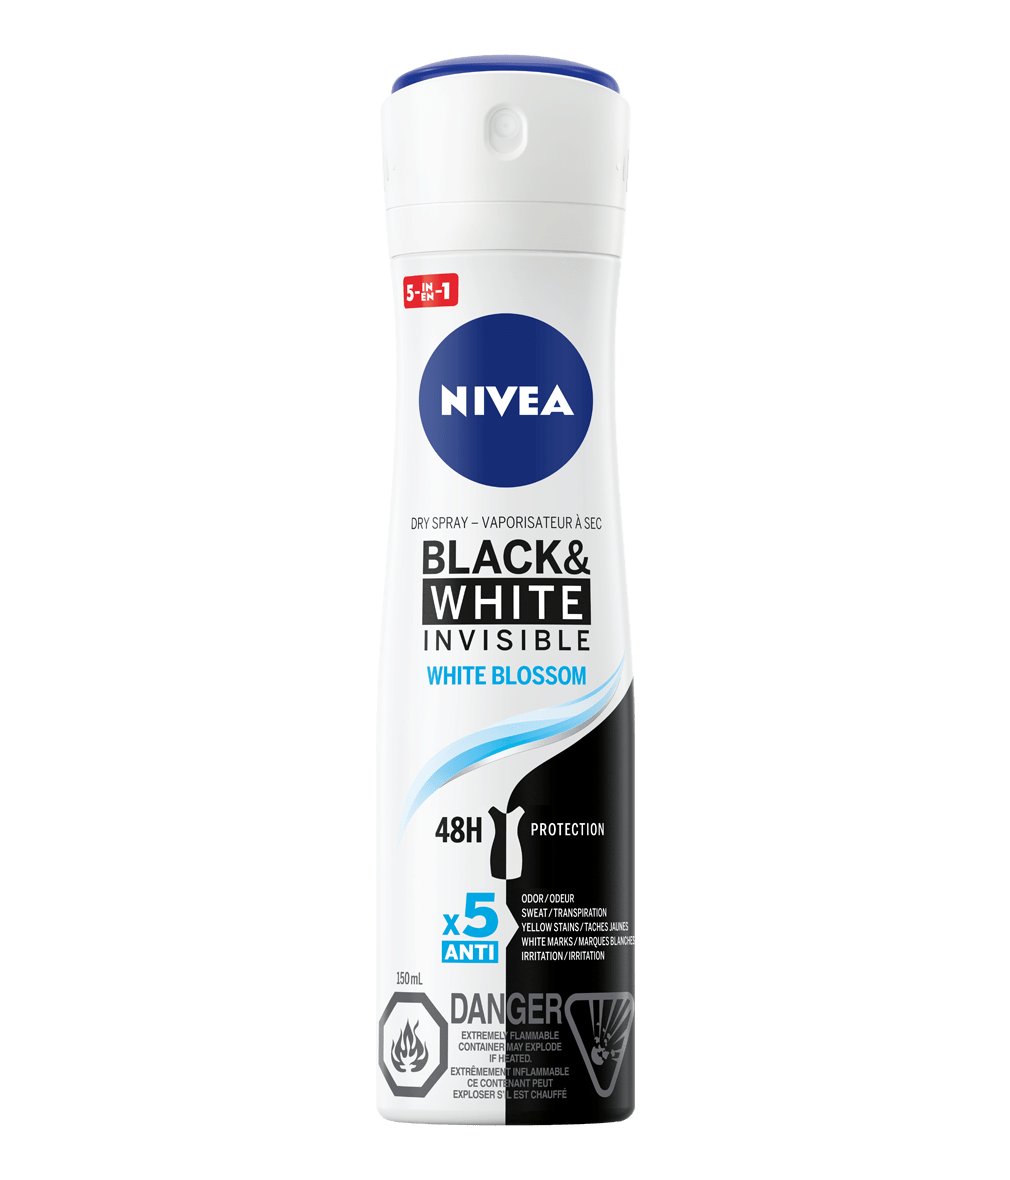 Black & White Invisible White Blossom Dry Spray